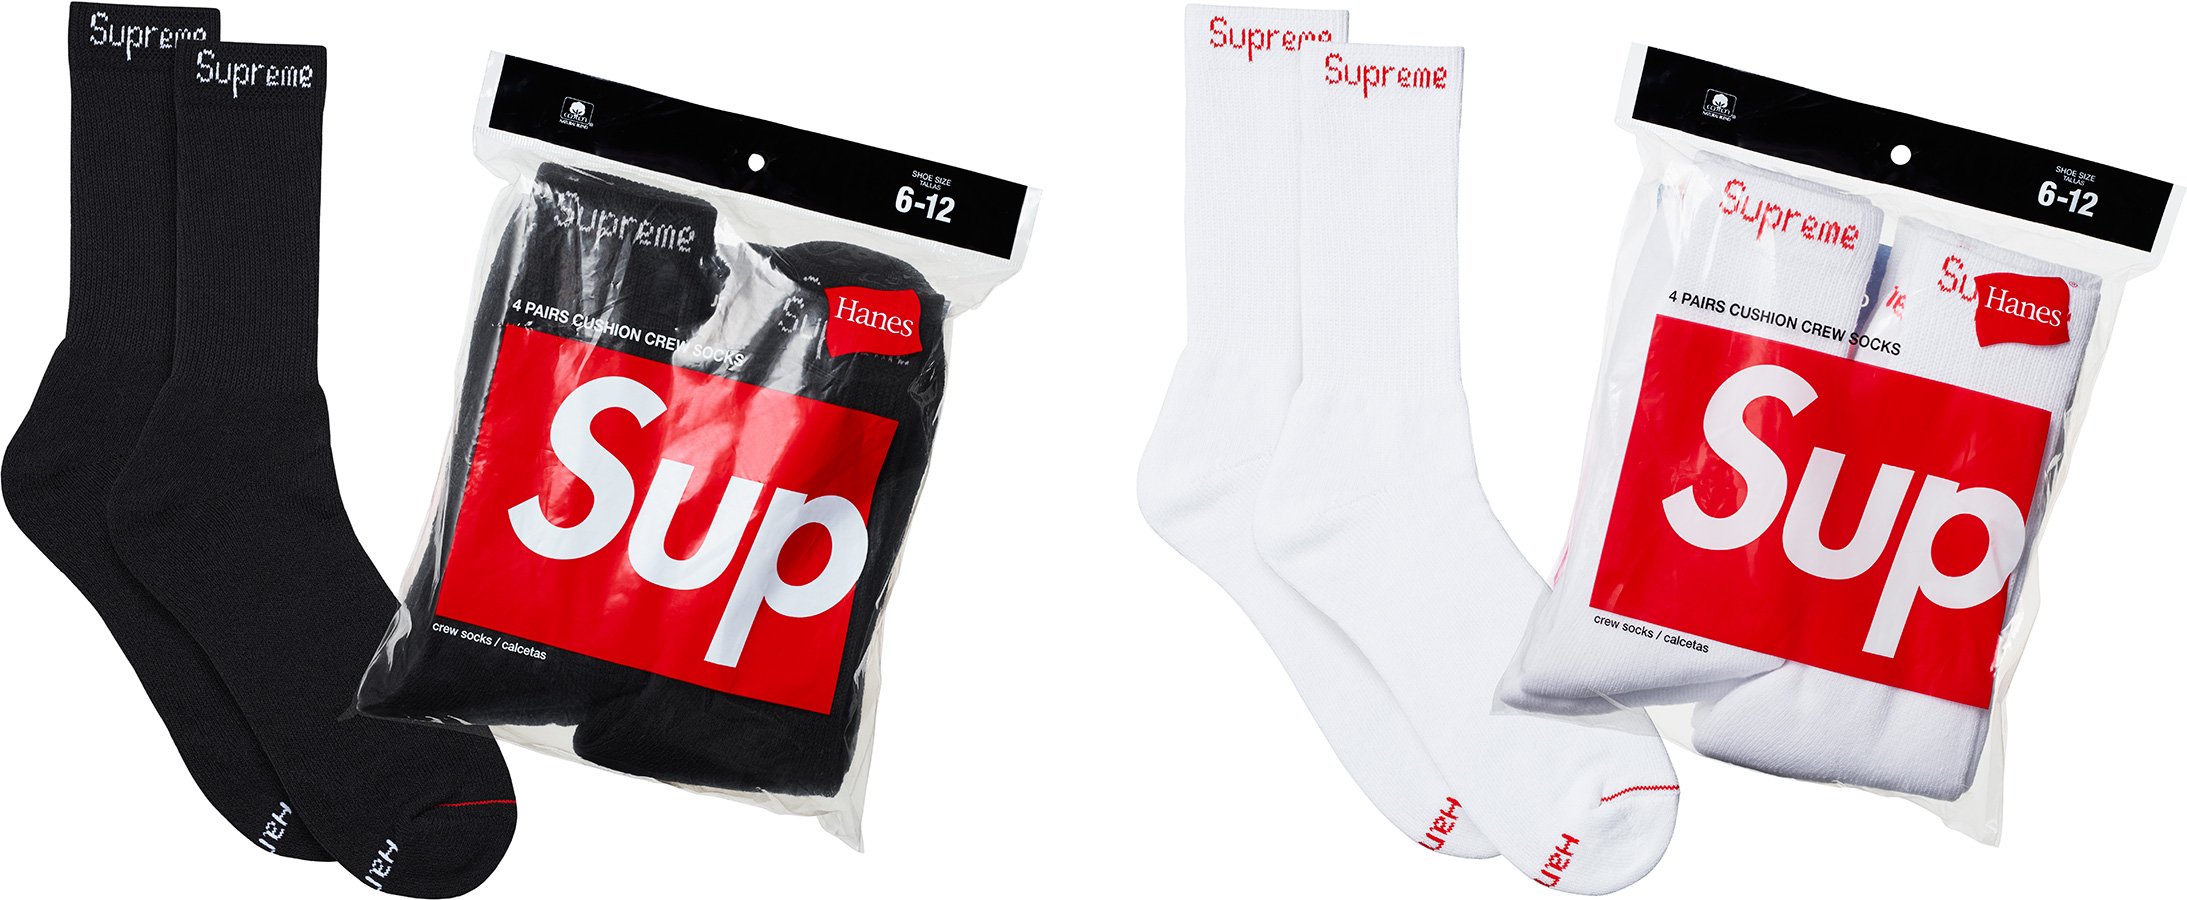 Supreme Hanes Crew Socks Pack of 4 Size 6-12 FW19 C